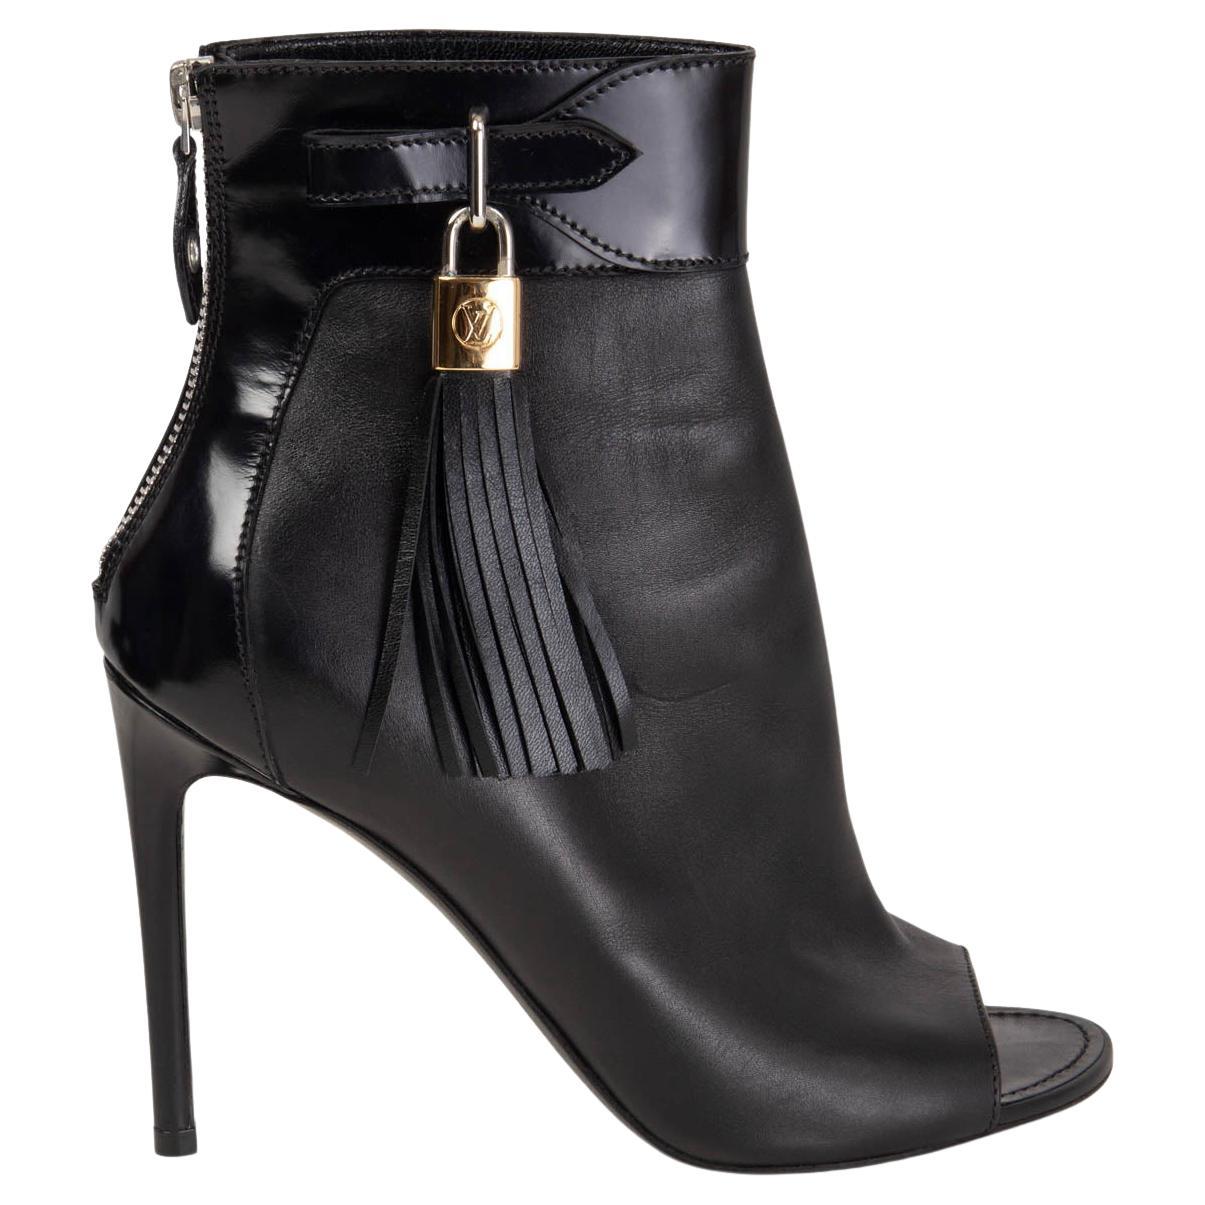 LOUIS VUITTON black leather TASSEL PEEP-TOE Ankle Boots Shoes 36.5 For Sale